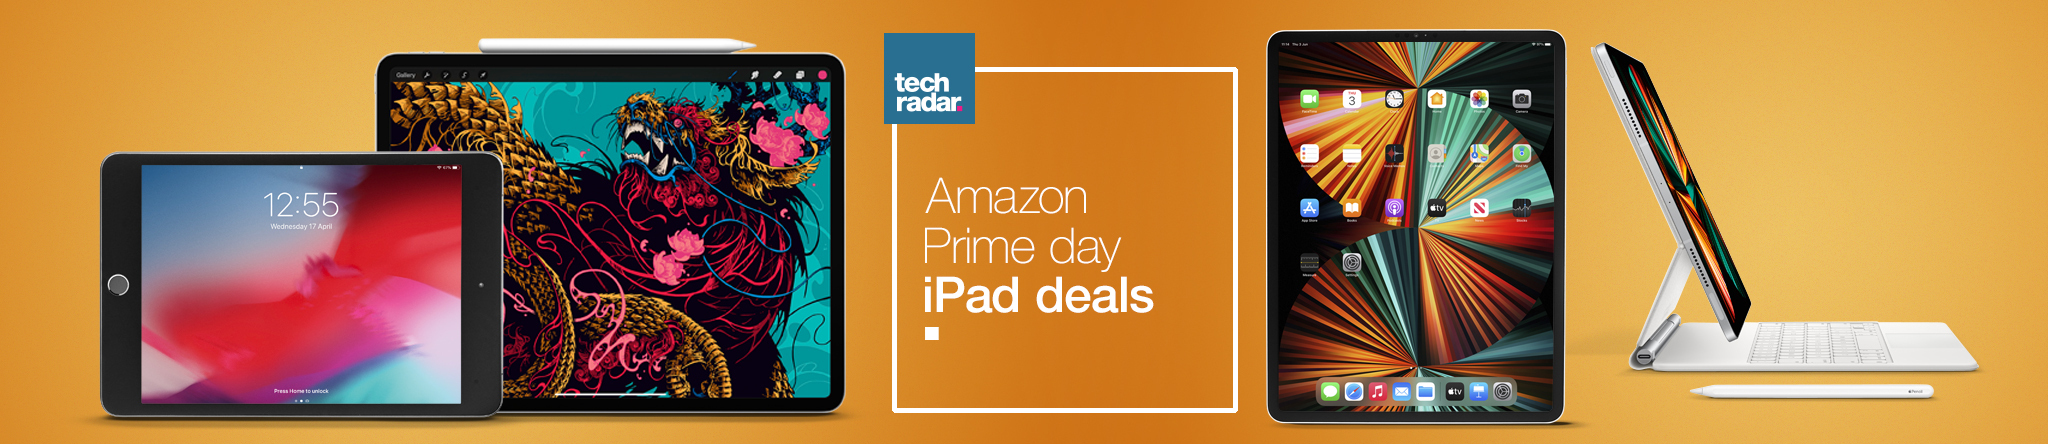 Amazon Prime Day Ipad Deals 21 Techradar